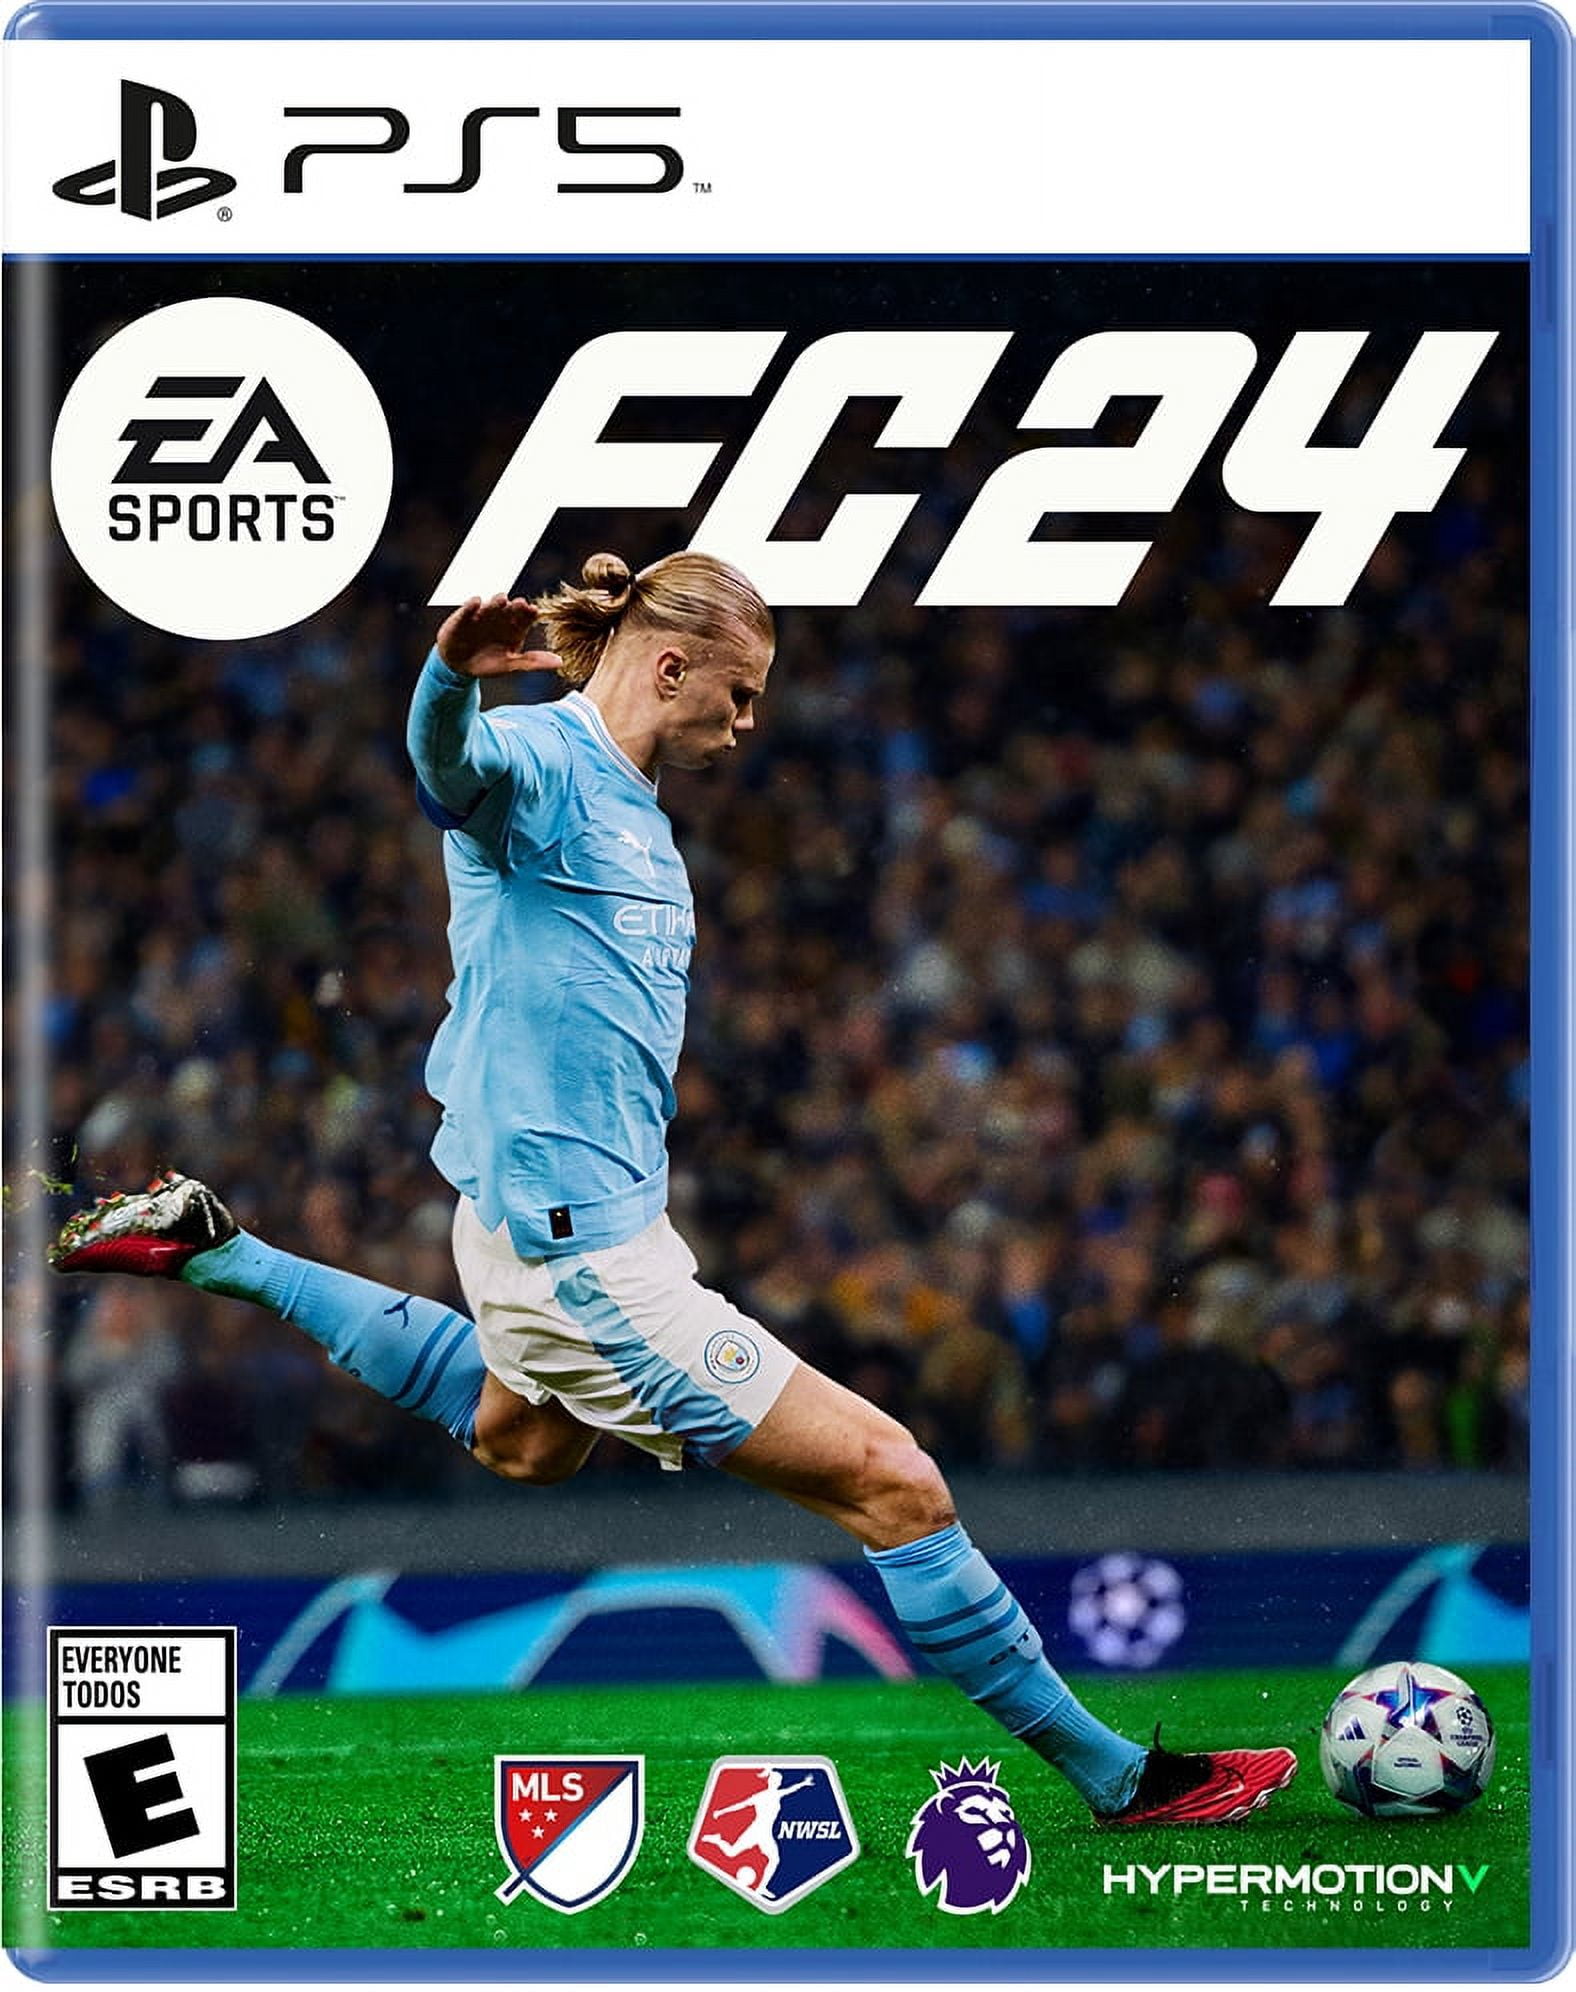 EA SPORTS FC™ 24 Unrivalled Authenticity - Leagues & Licenses